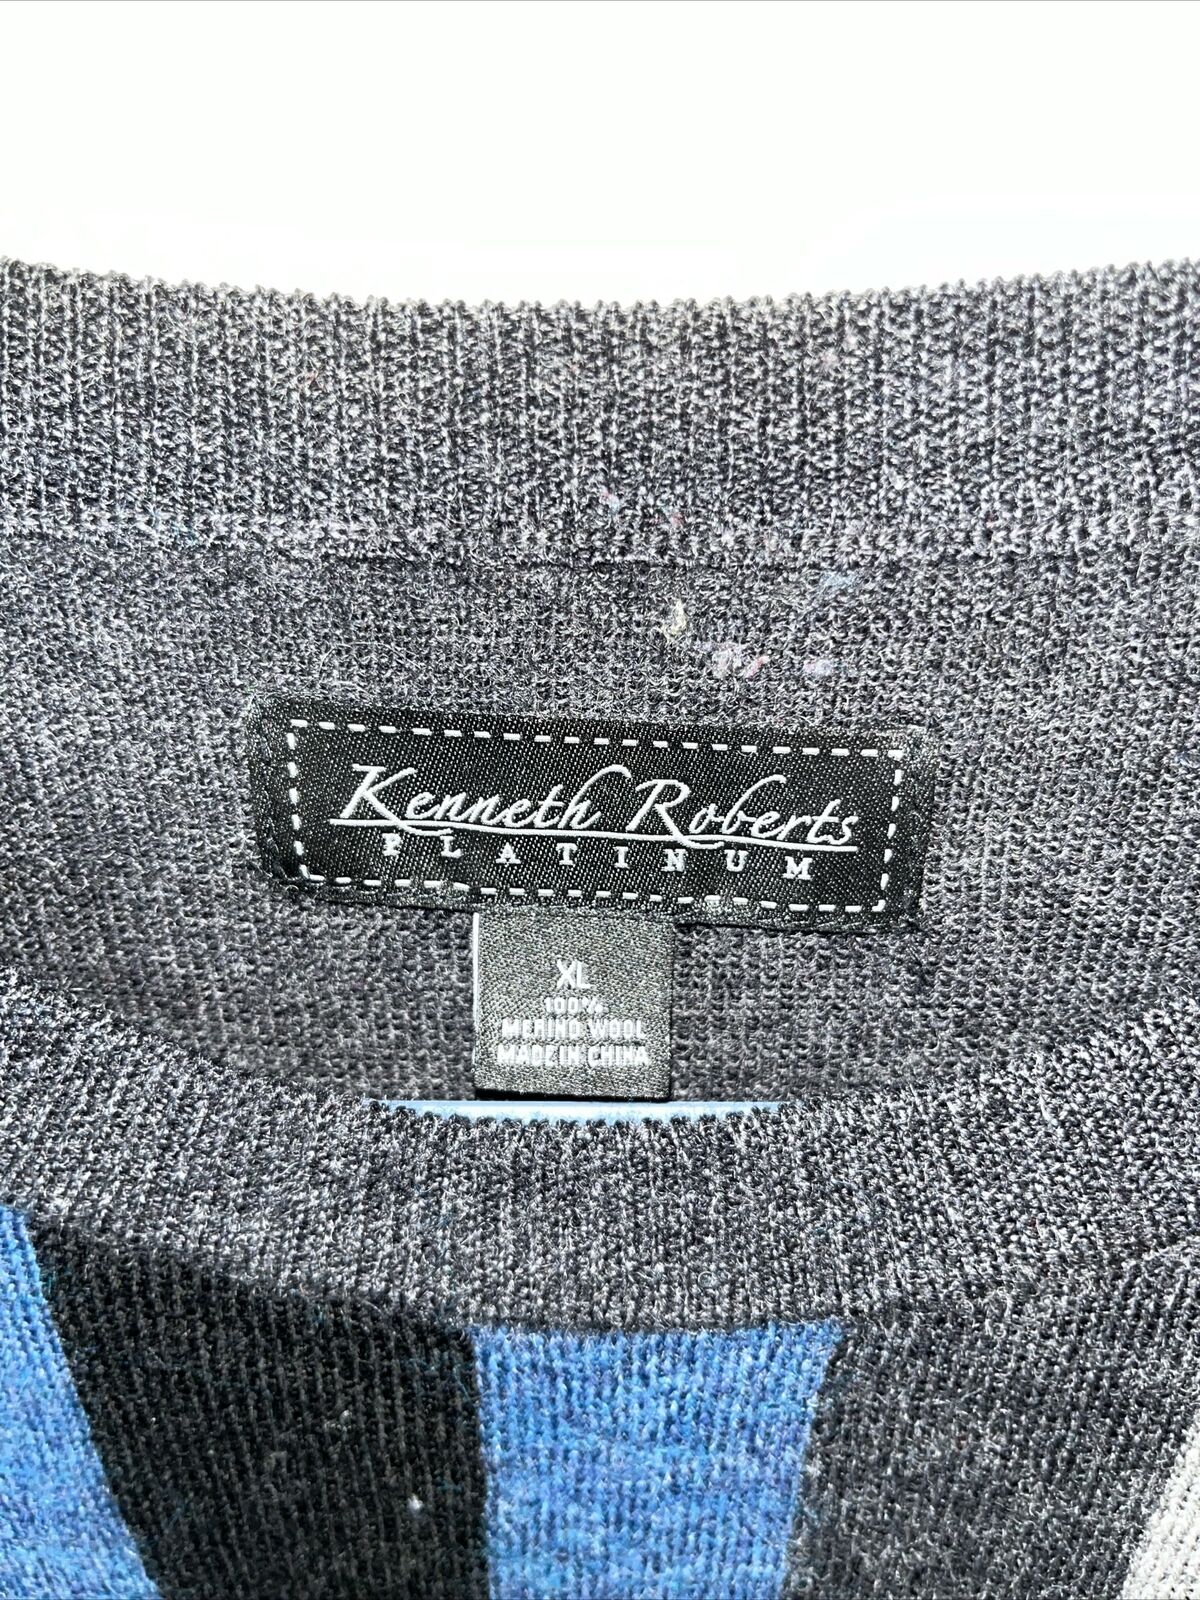 KENNETH ROBERTS Merino Wool Sweater Men XL  50”x3… - image 4